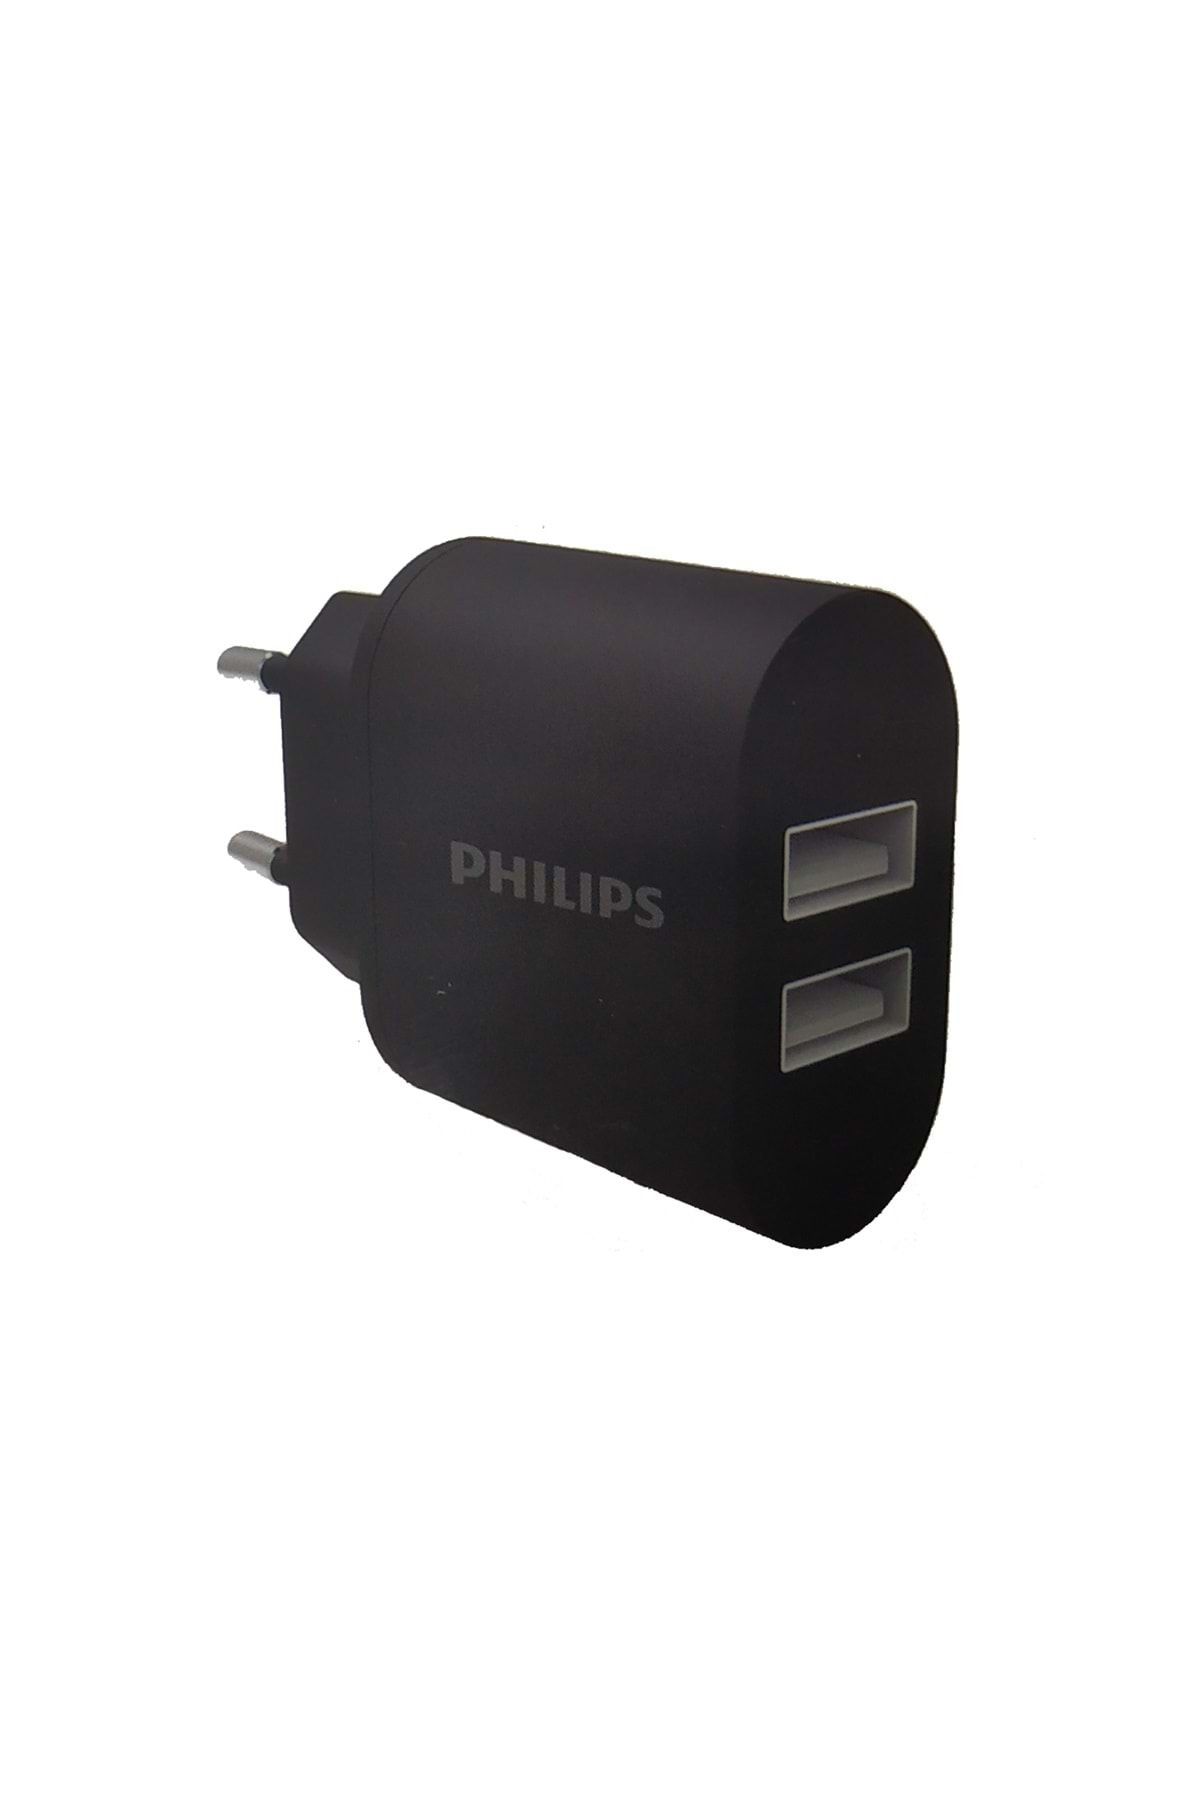 Philips Dlp1302nb/51 15.5w 2.1a + 1a Çift Usb Akıllı Şarj Cihazı